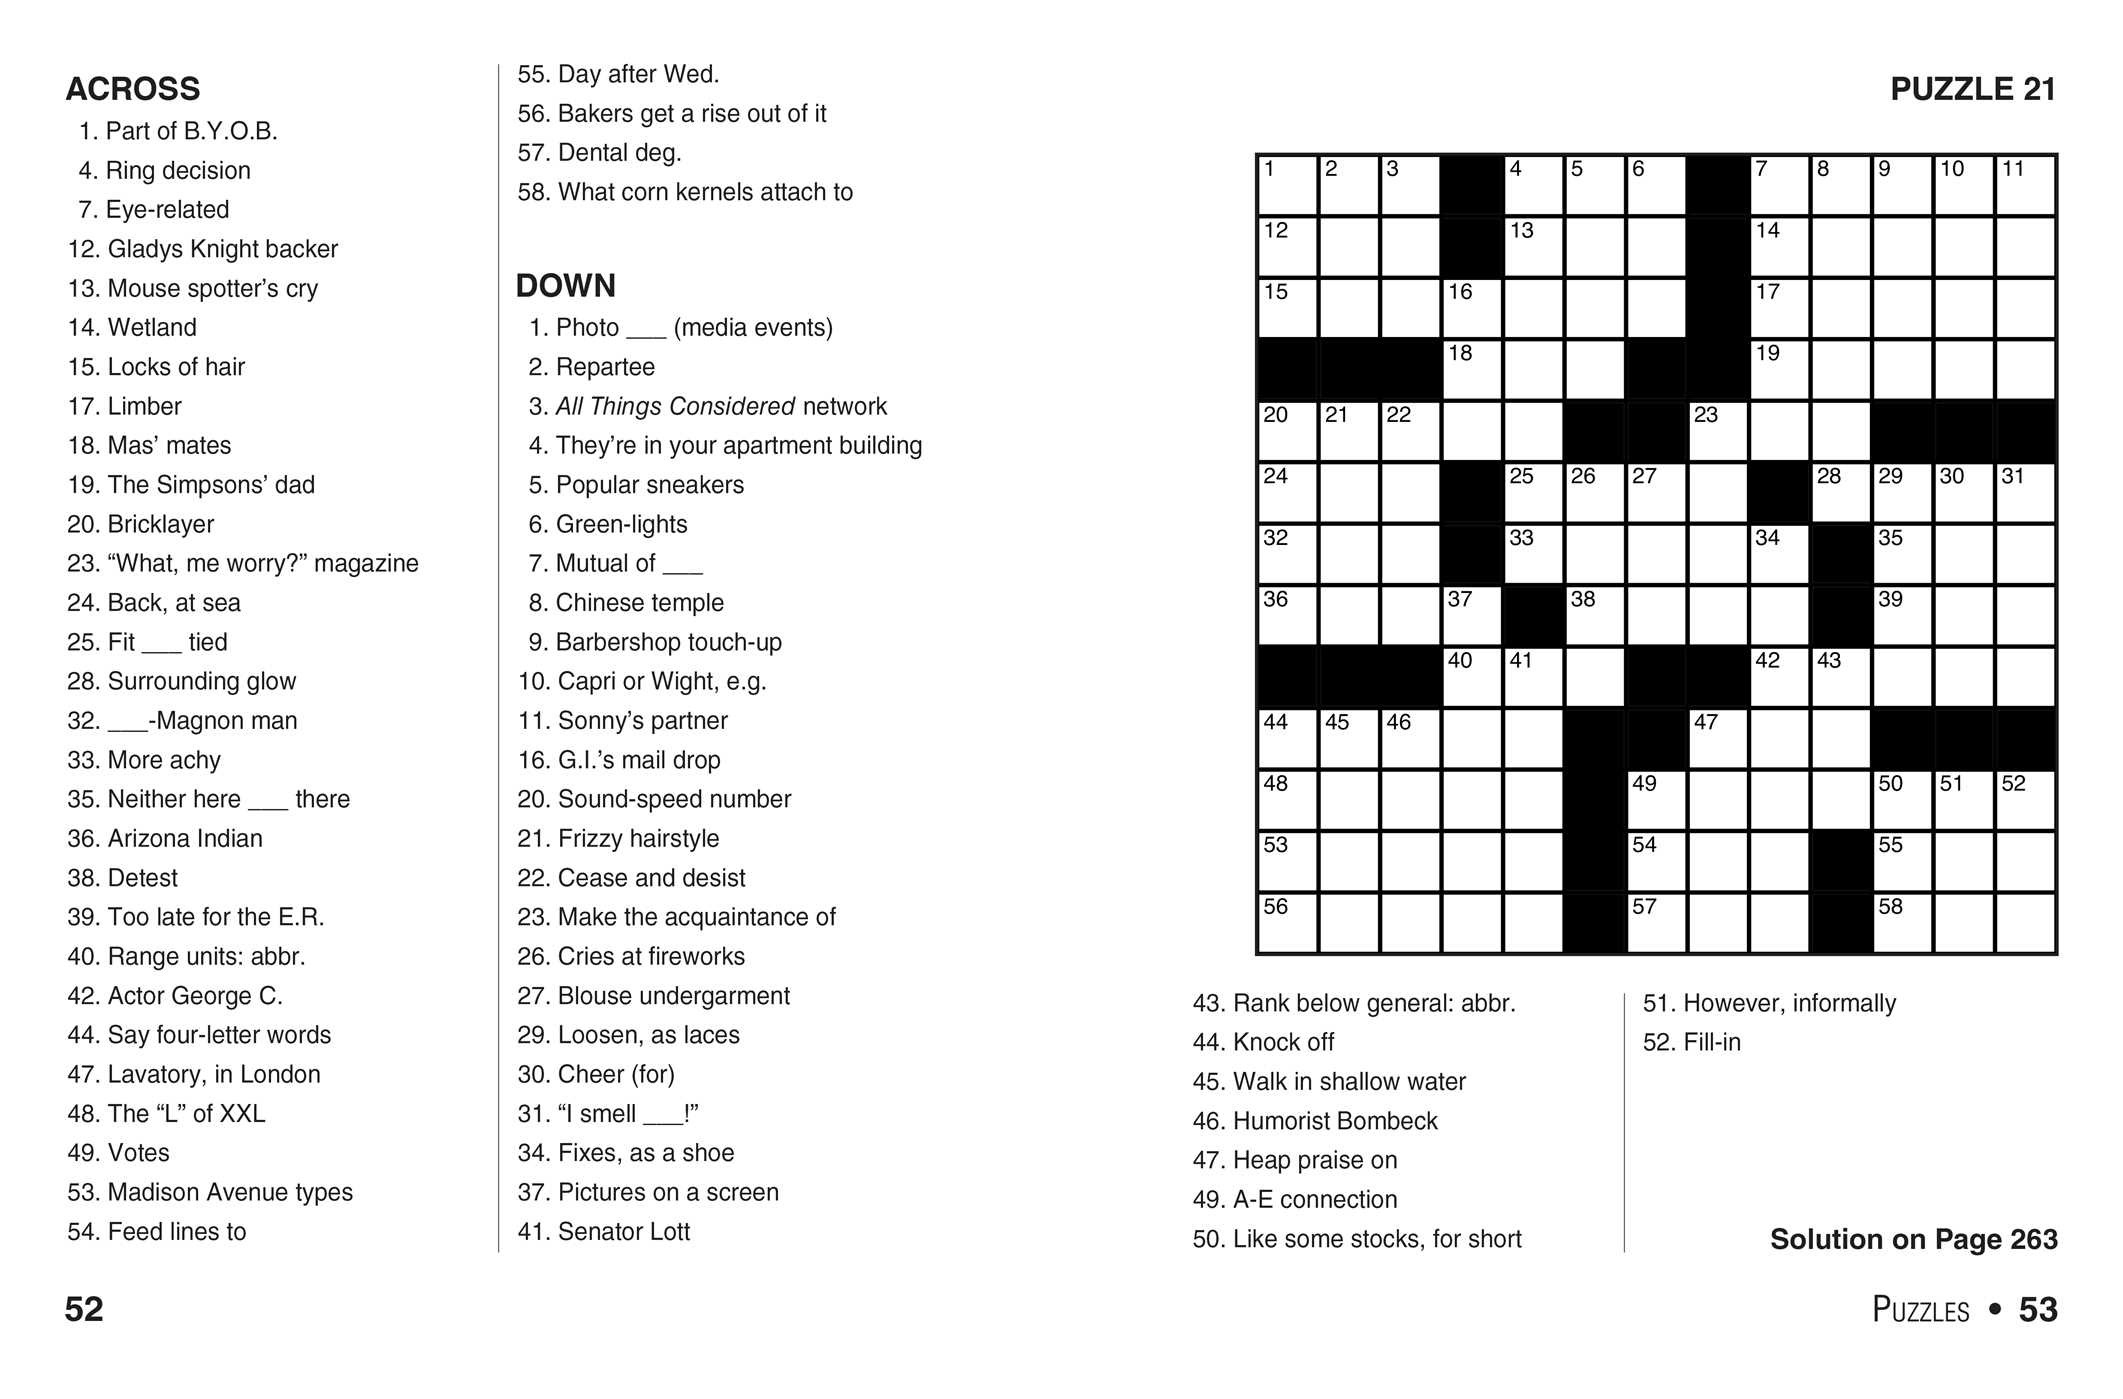 Printable Crossword Puzzles For Seniors